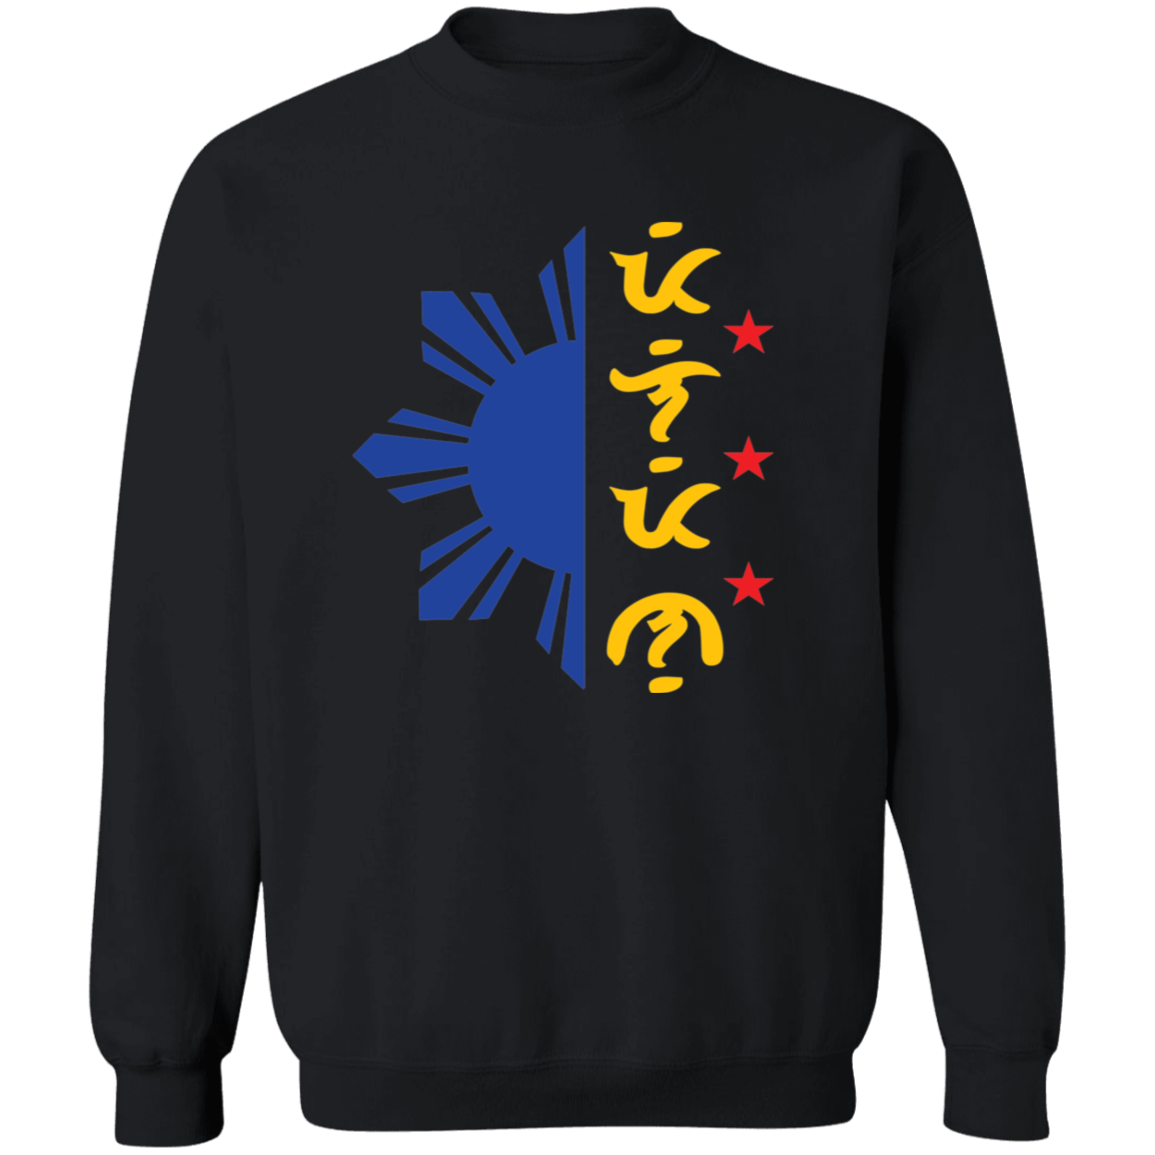 Tricolor Filipino in Baybayin Script Half Sun Unisex Crewneck Pullover Sweatshirt